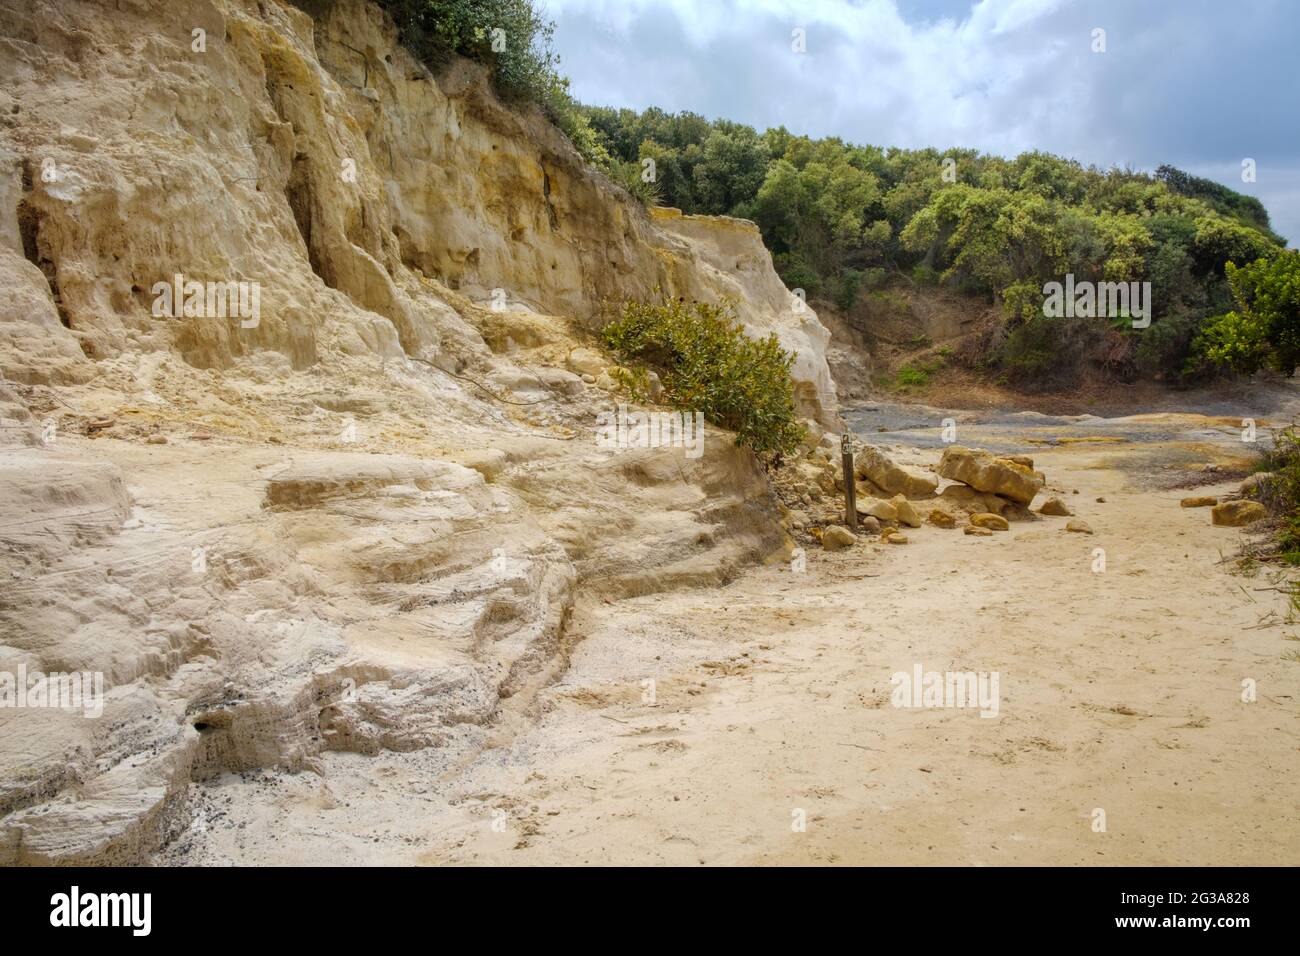 View of sulfur mine so-called solfatara inside natural reserve of Tor Caldara in Lavinio, Anzio, Rome, Italy Stock Photo